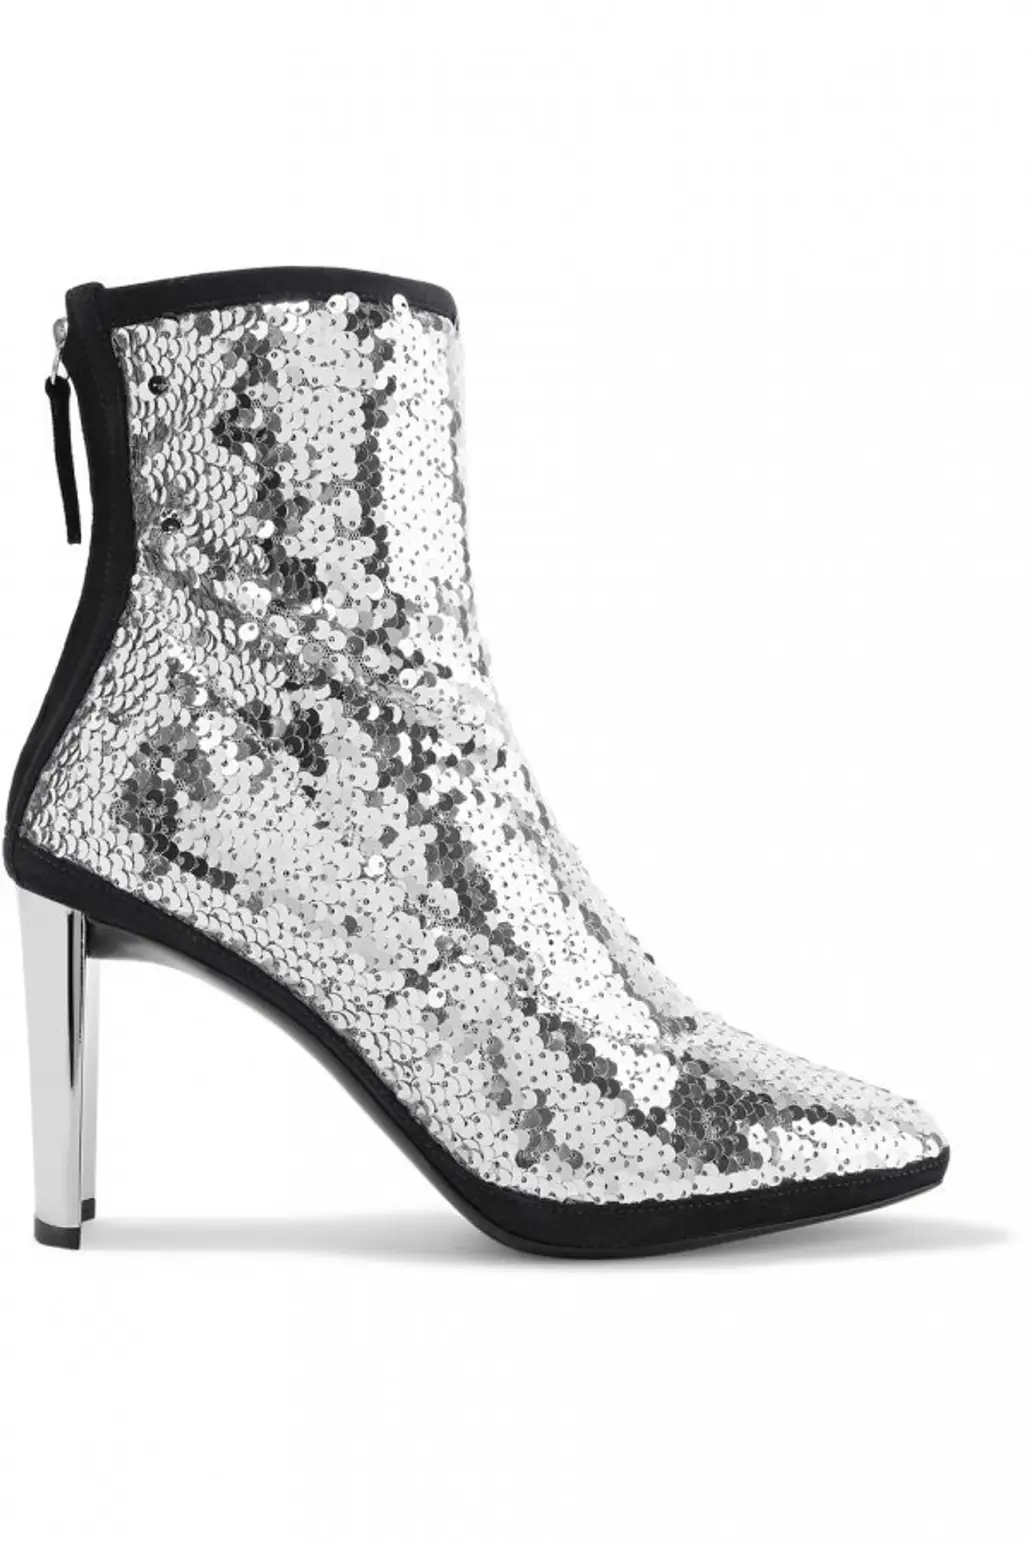 footwear, boot, shoe, high heeled footwear, black and white,